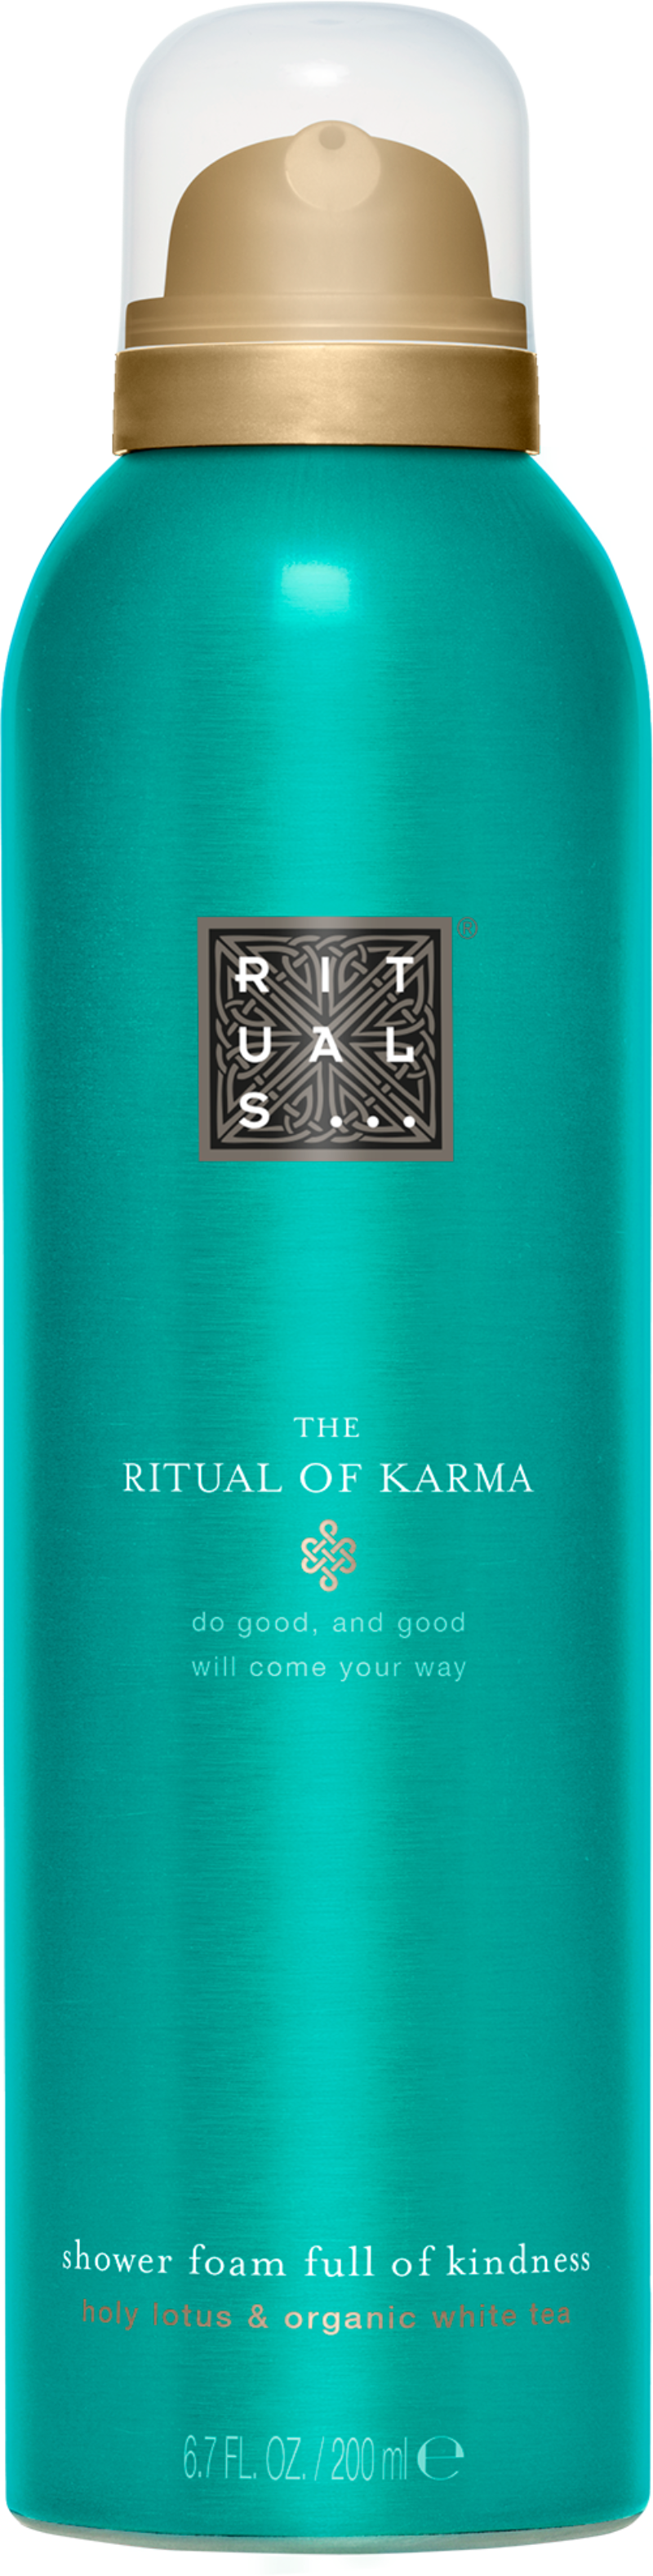 Buy RITUALS Karma Soothing Gift Set - Foaming Shower Gel, Body